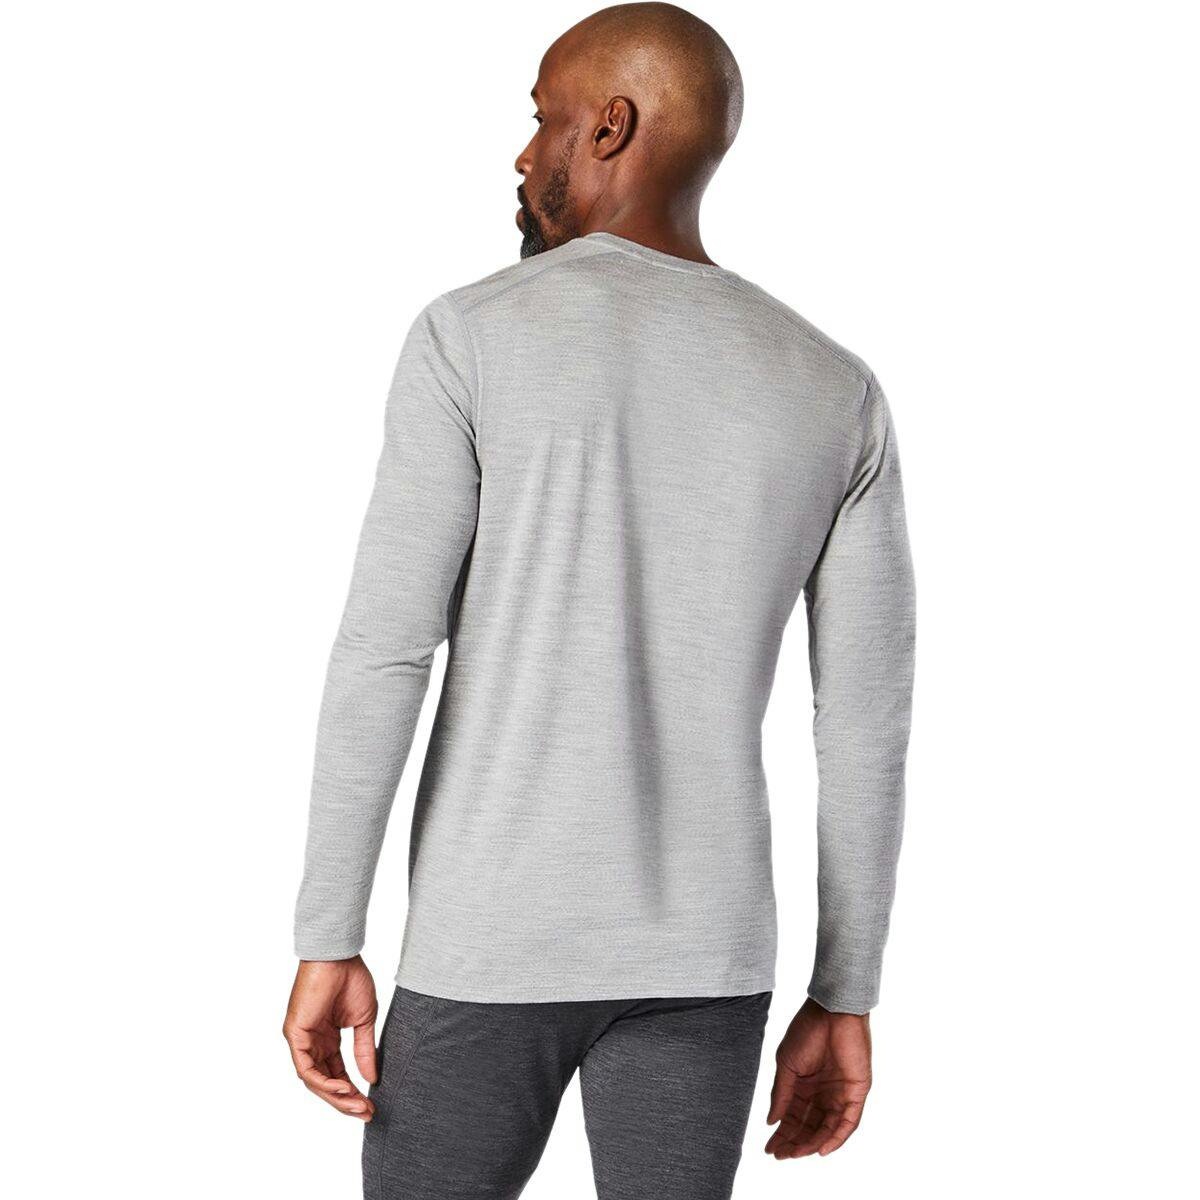 Smartwool Men's Merino 150 Baselayer Long Sleeve Shirt